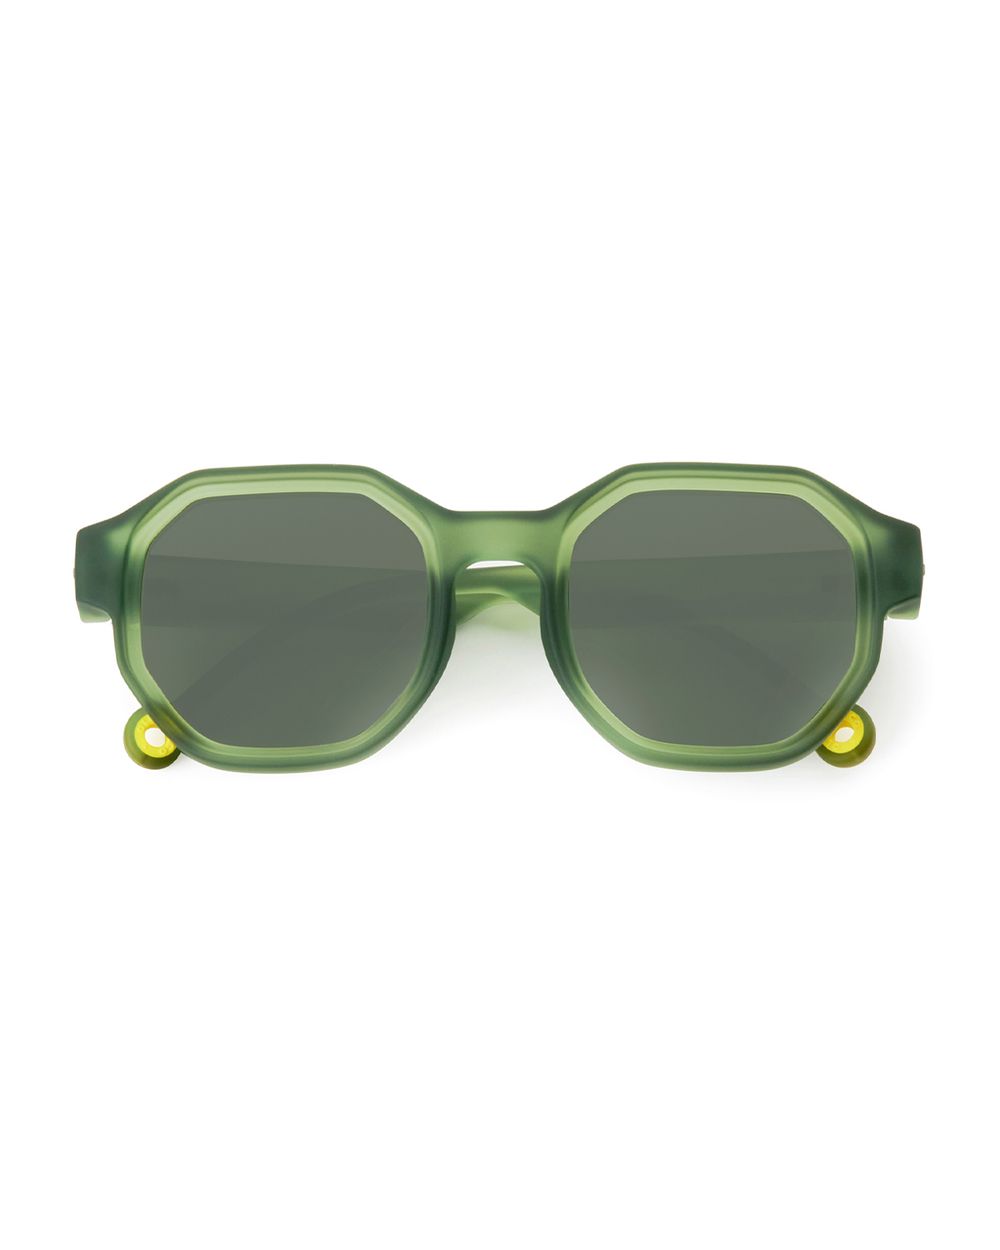 Junior Sunglasses Olive Green #D